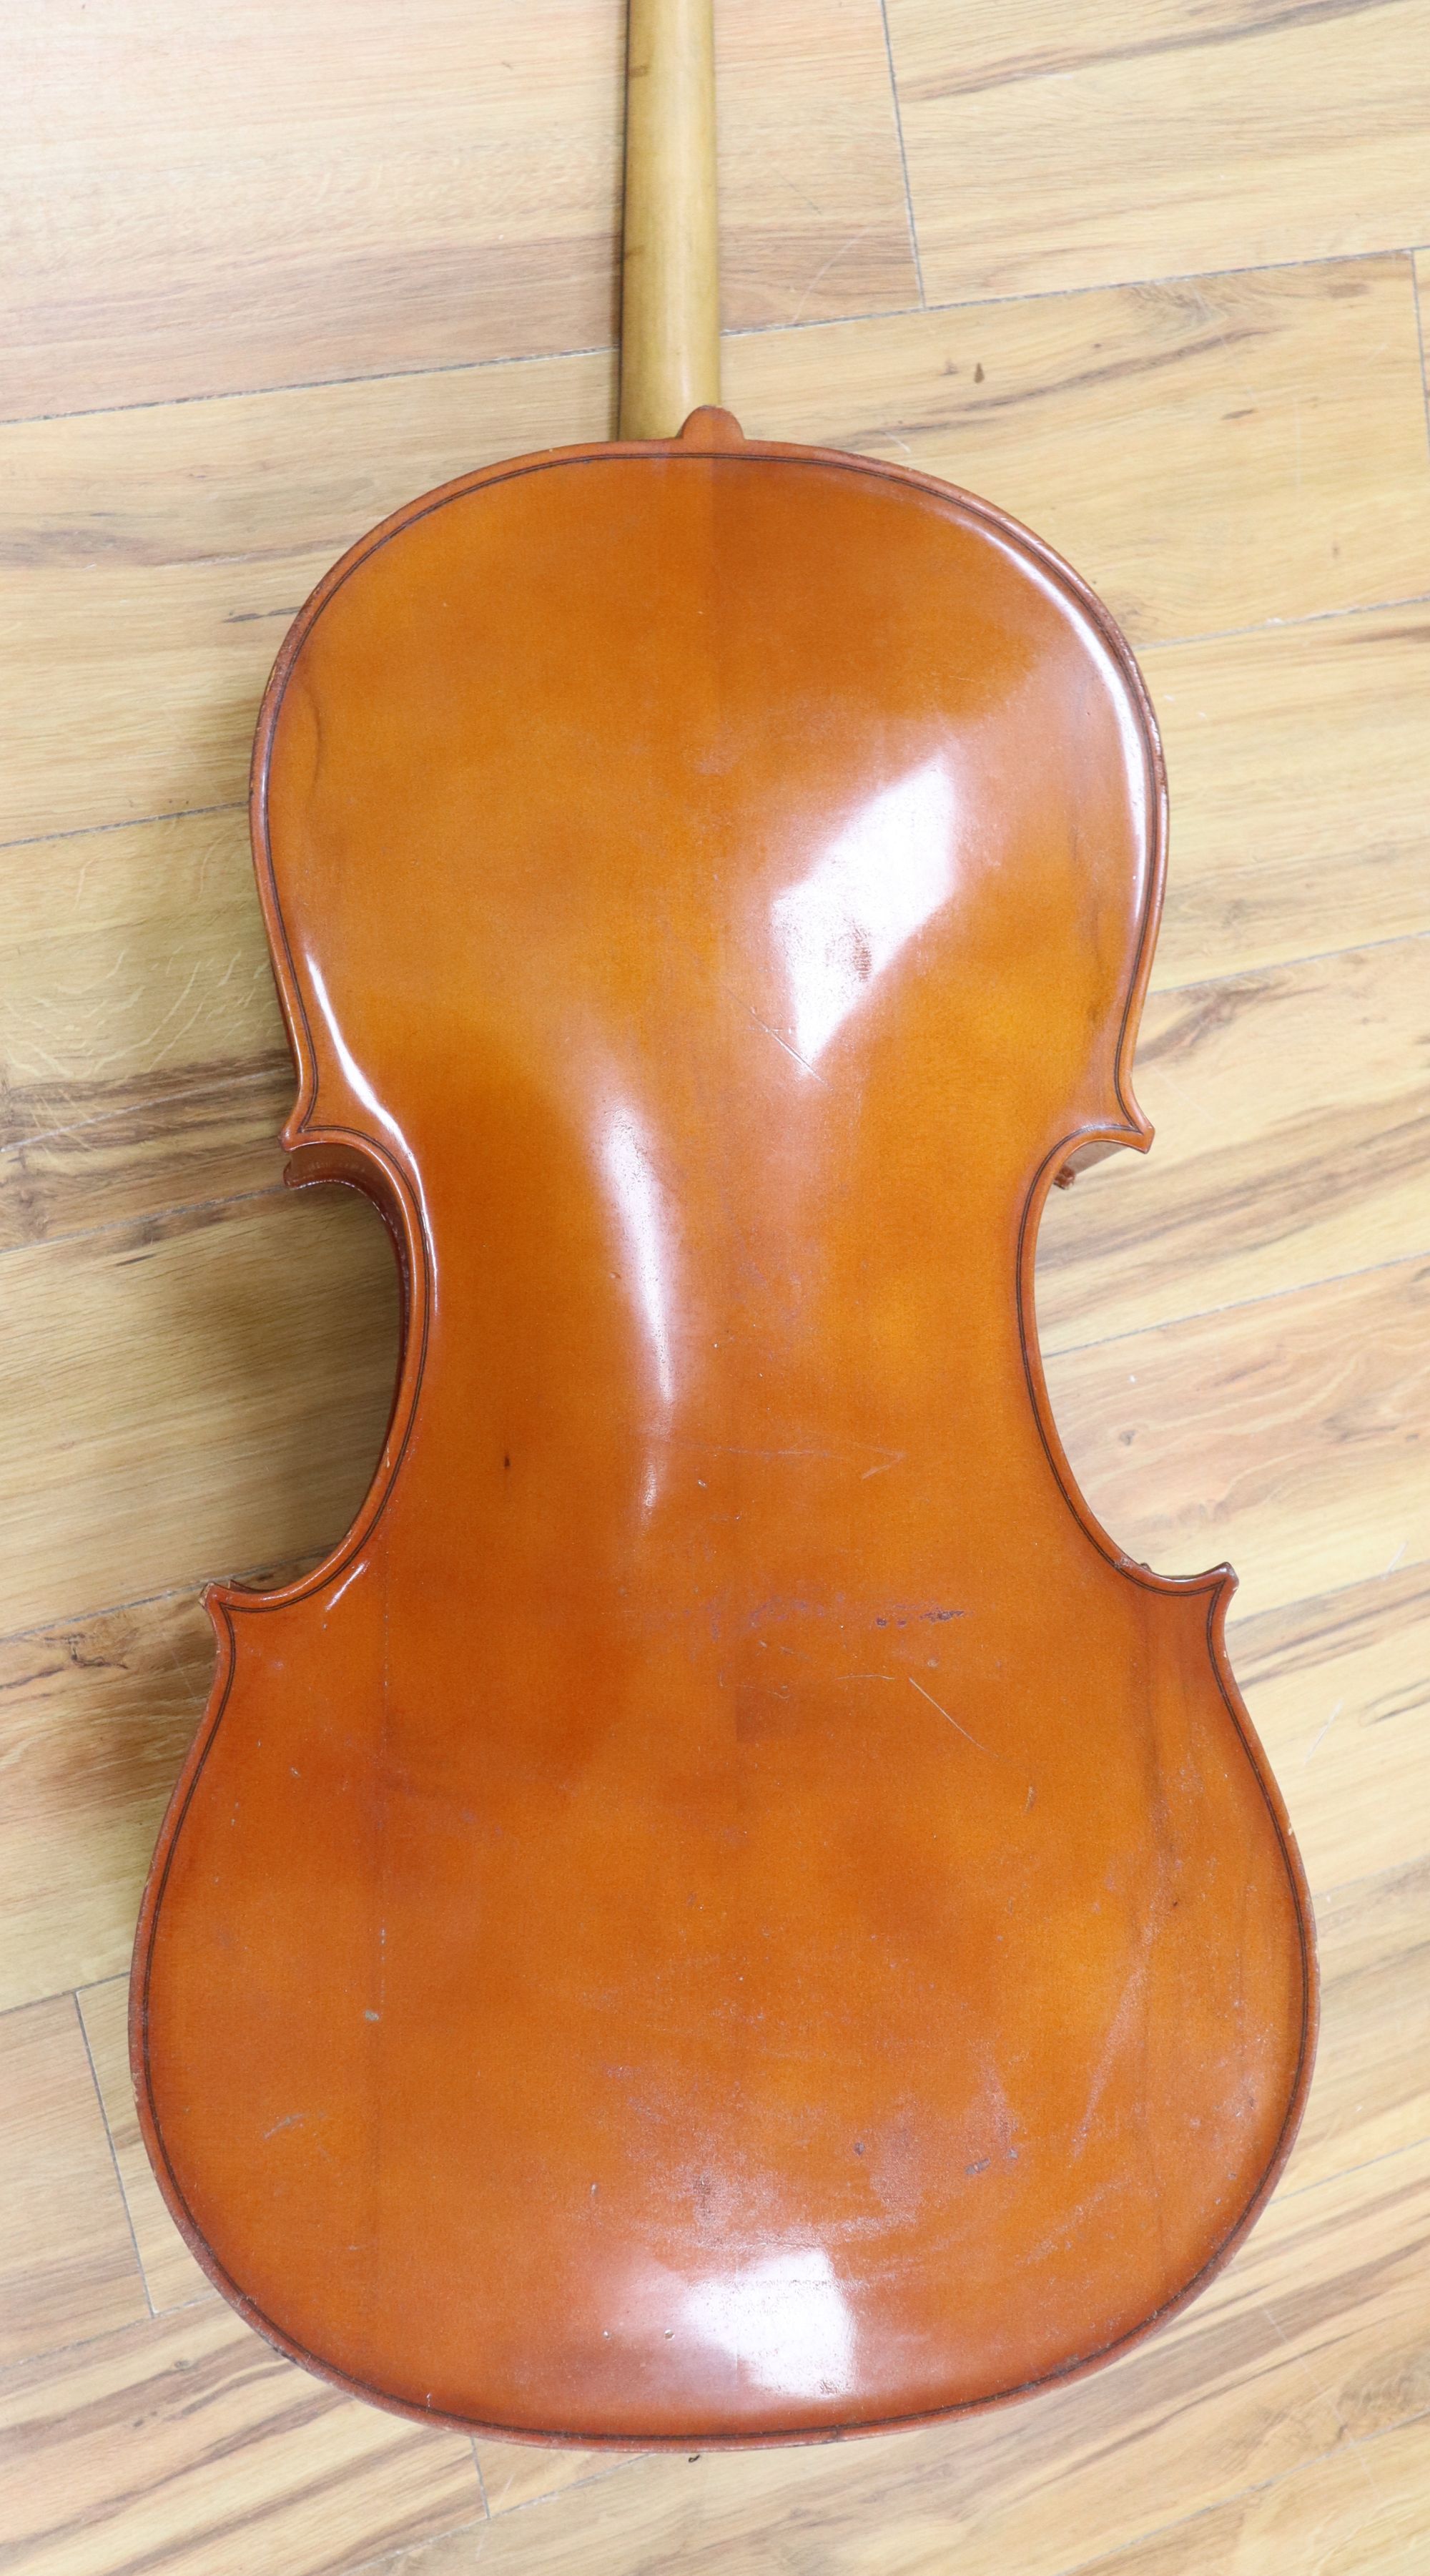 A 20th century students cello